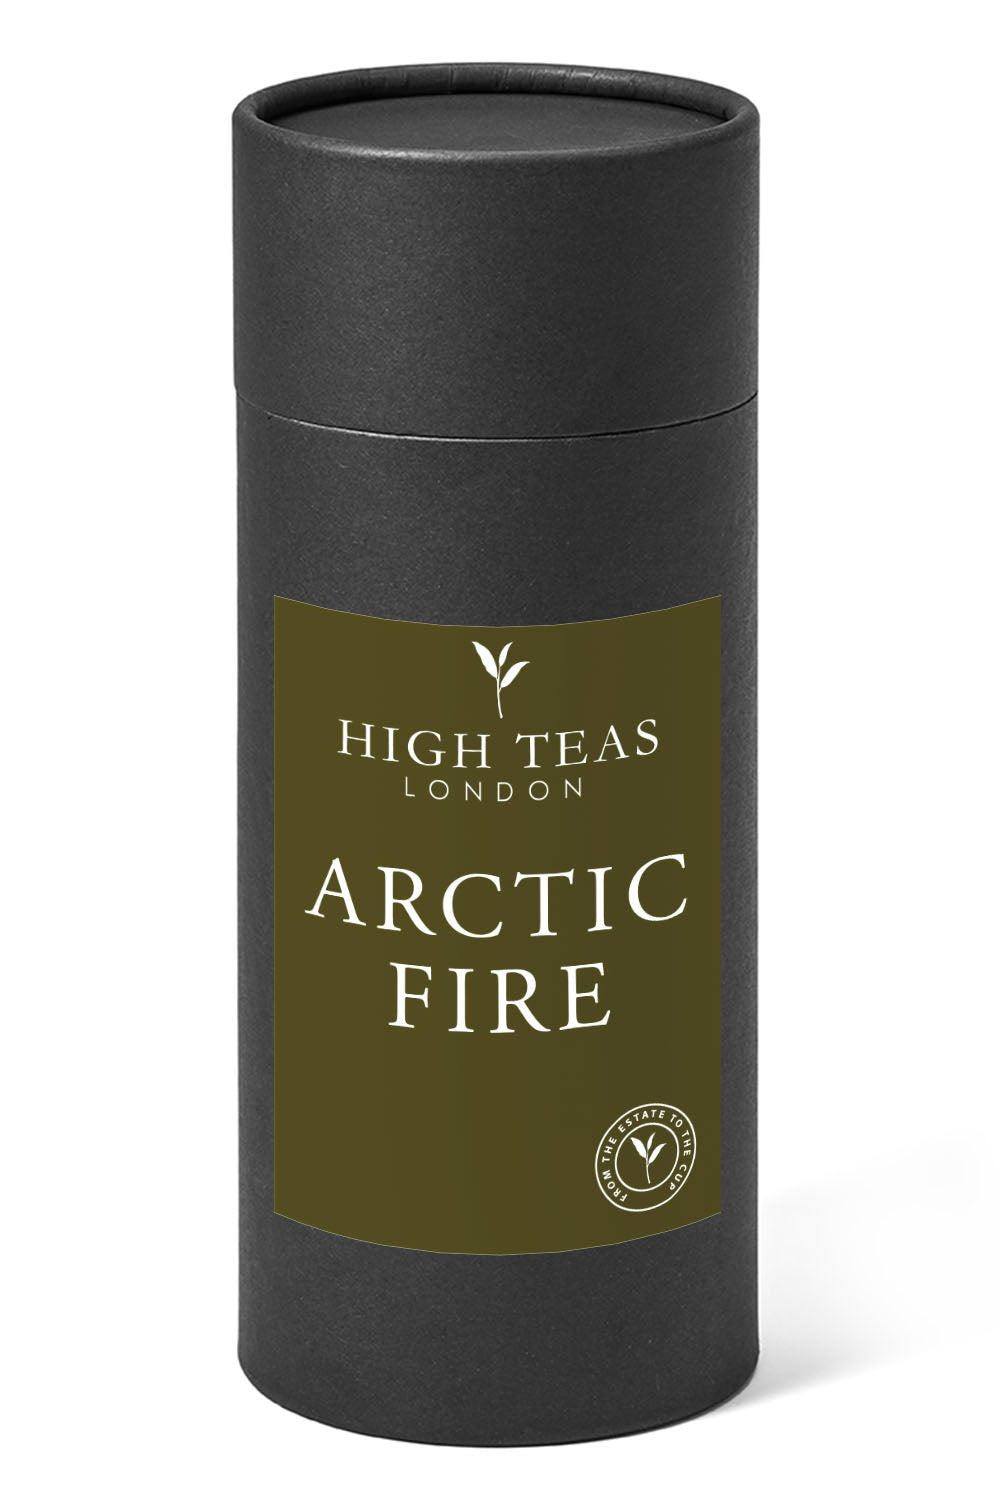 Arctic Fire-150g gift-Loose Leaf Tea-High Teas